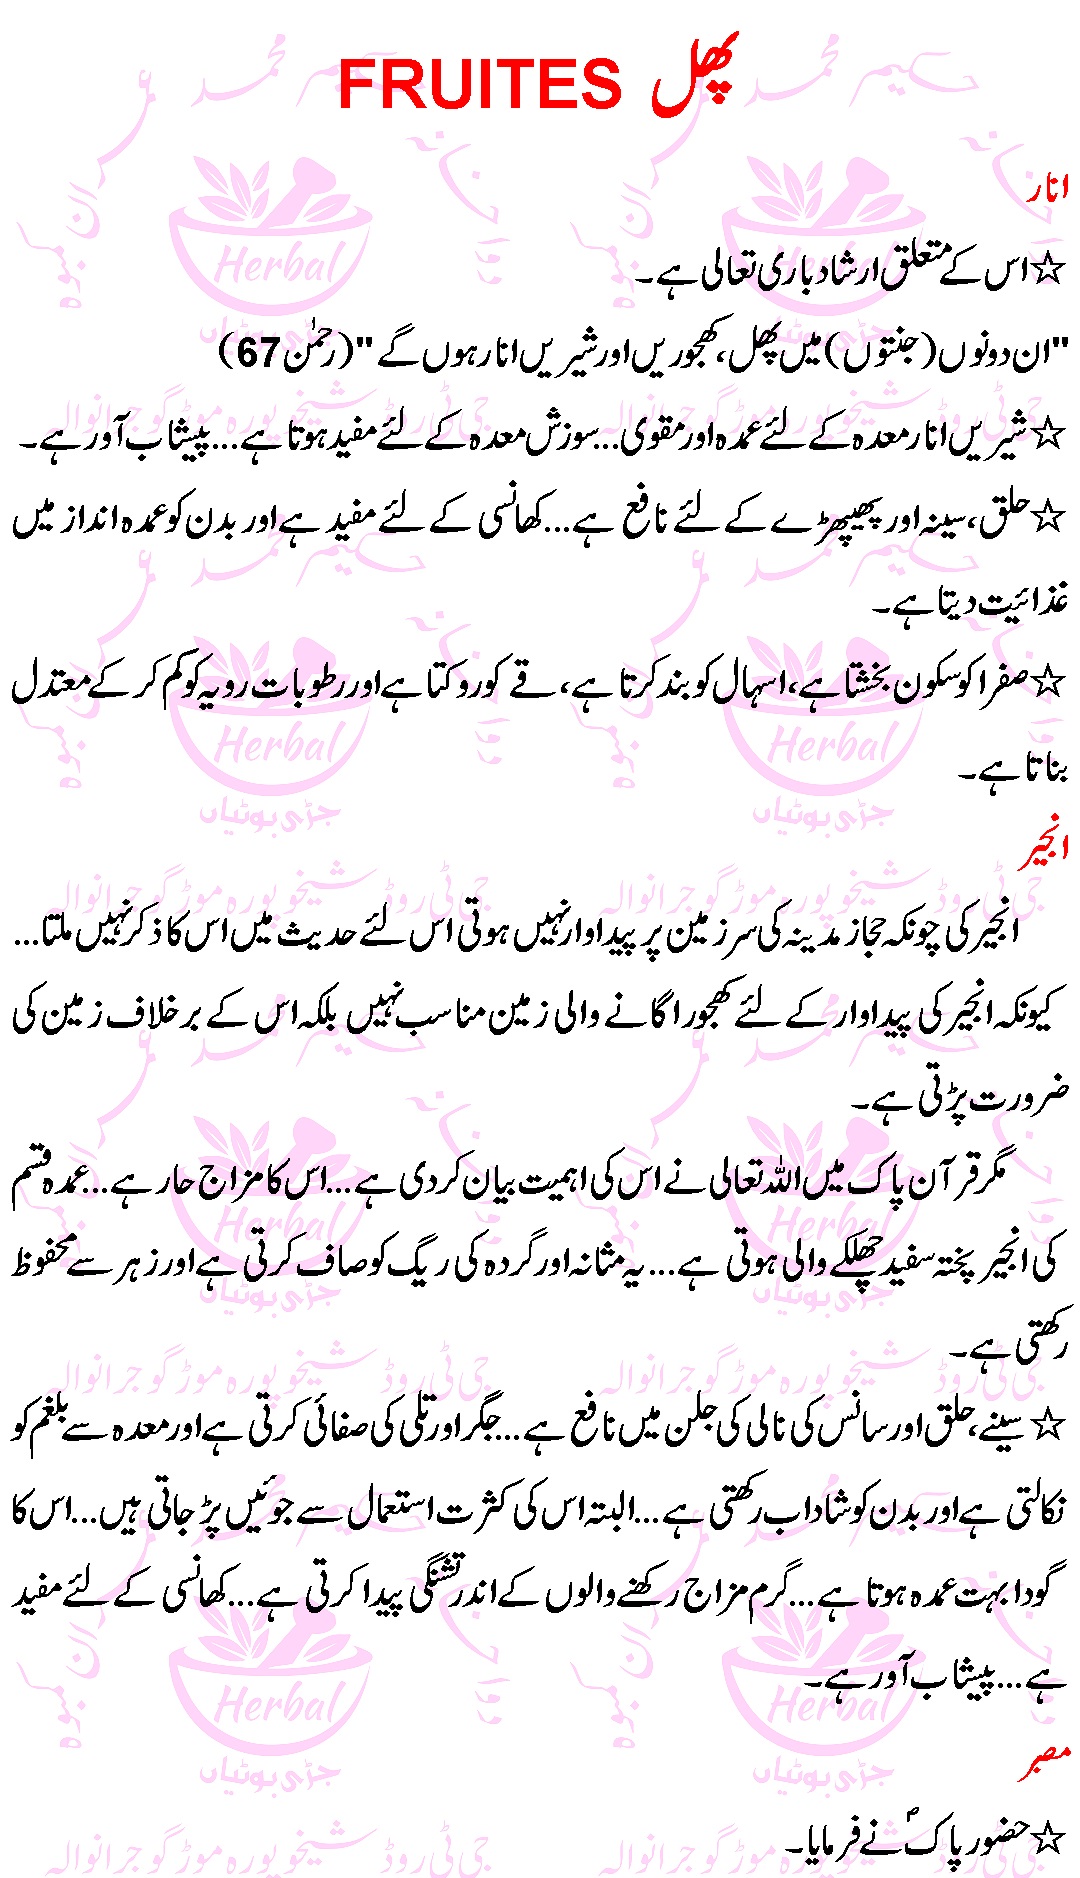 Tib E Nabvi Or Phaloun K fawaid (Benifits Of Fruits ) In Urdu (1)